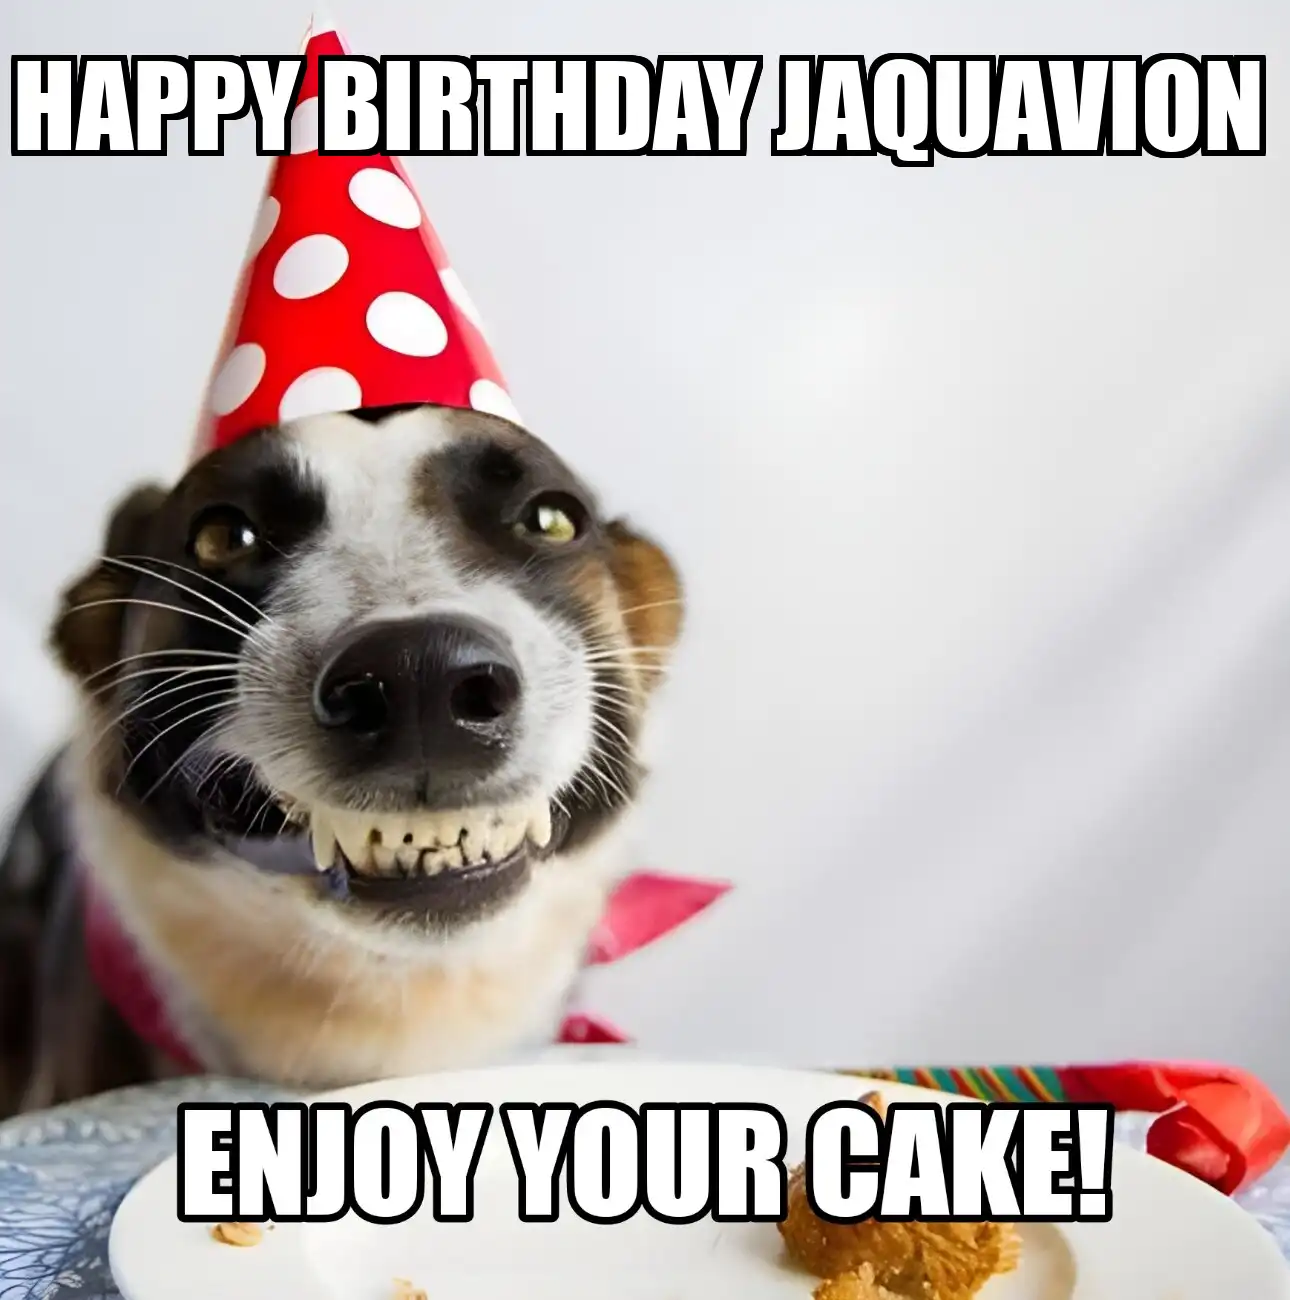 Happy Birthday Jaquavion Enjoy Your Cake Dog Meme